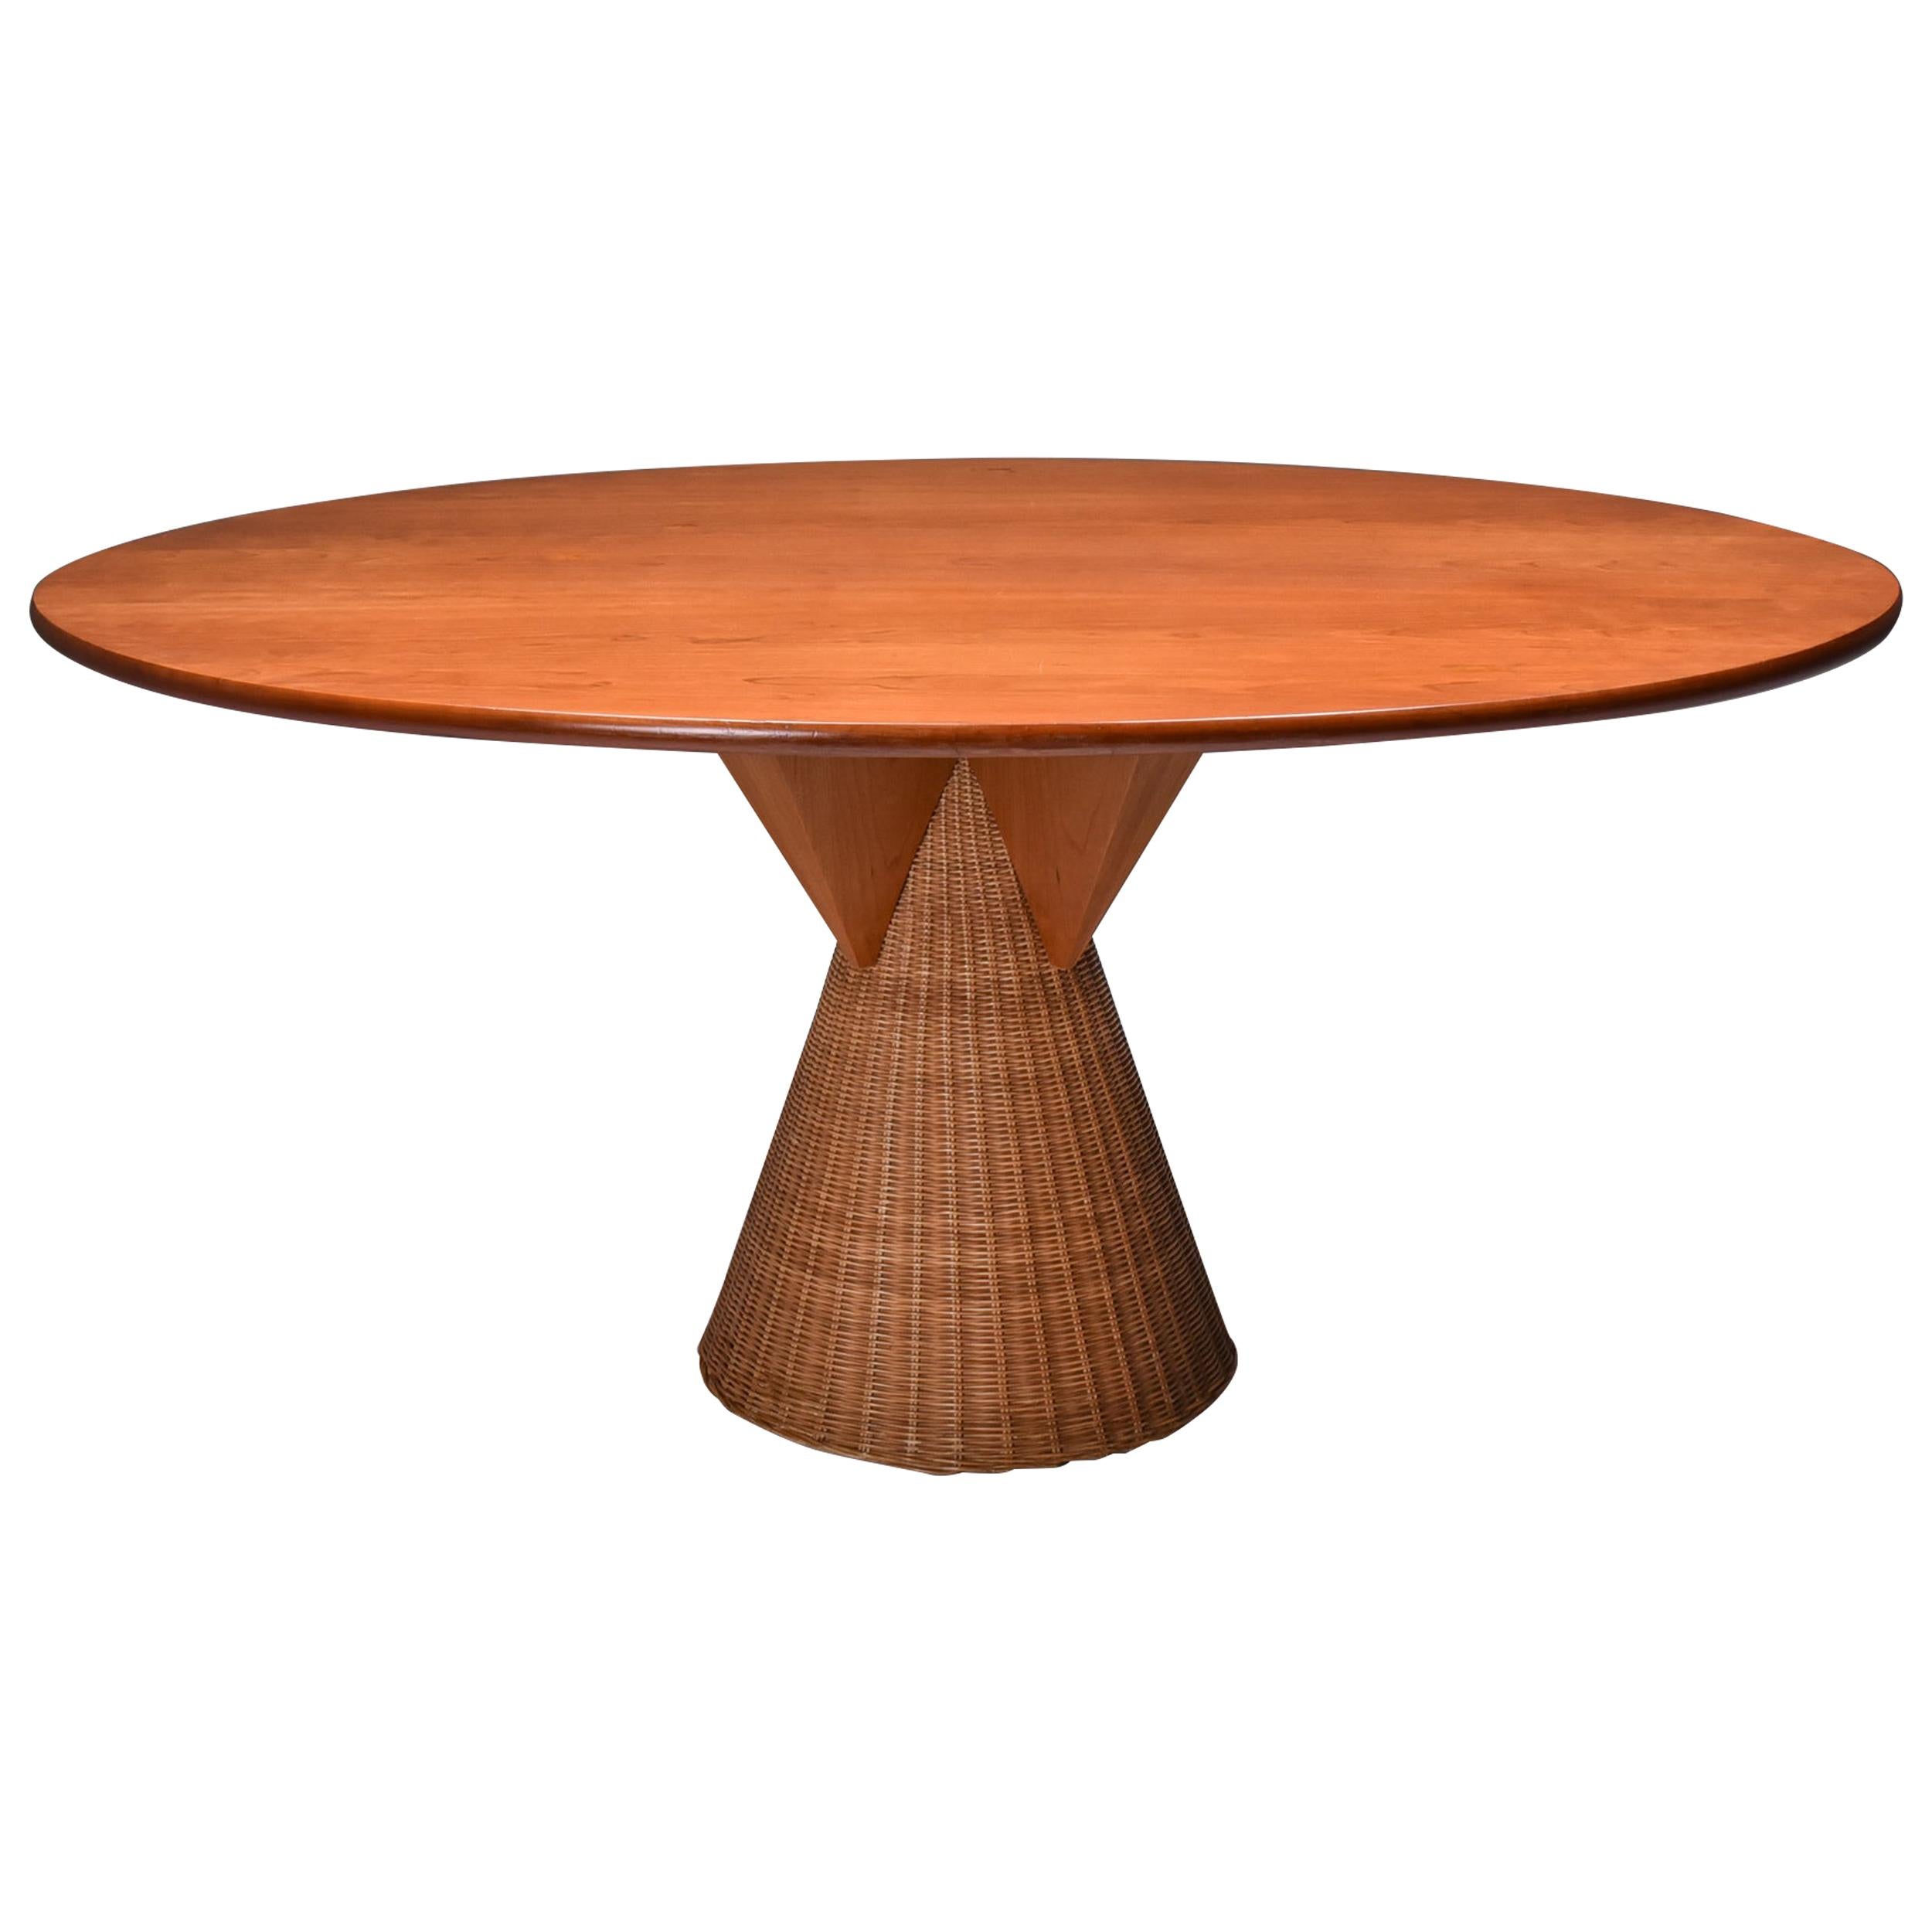 Italian Design Oval Mid-Century Modern Dining Table on a Rattan Base